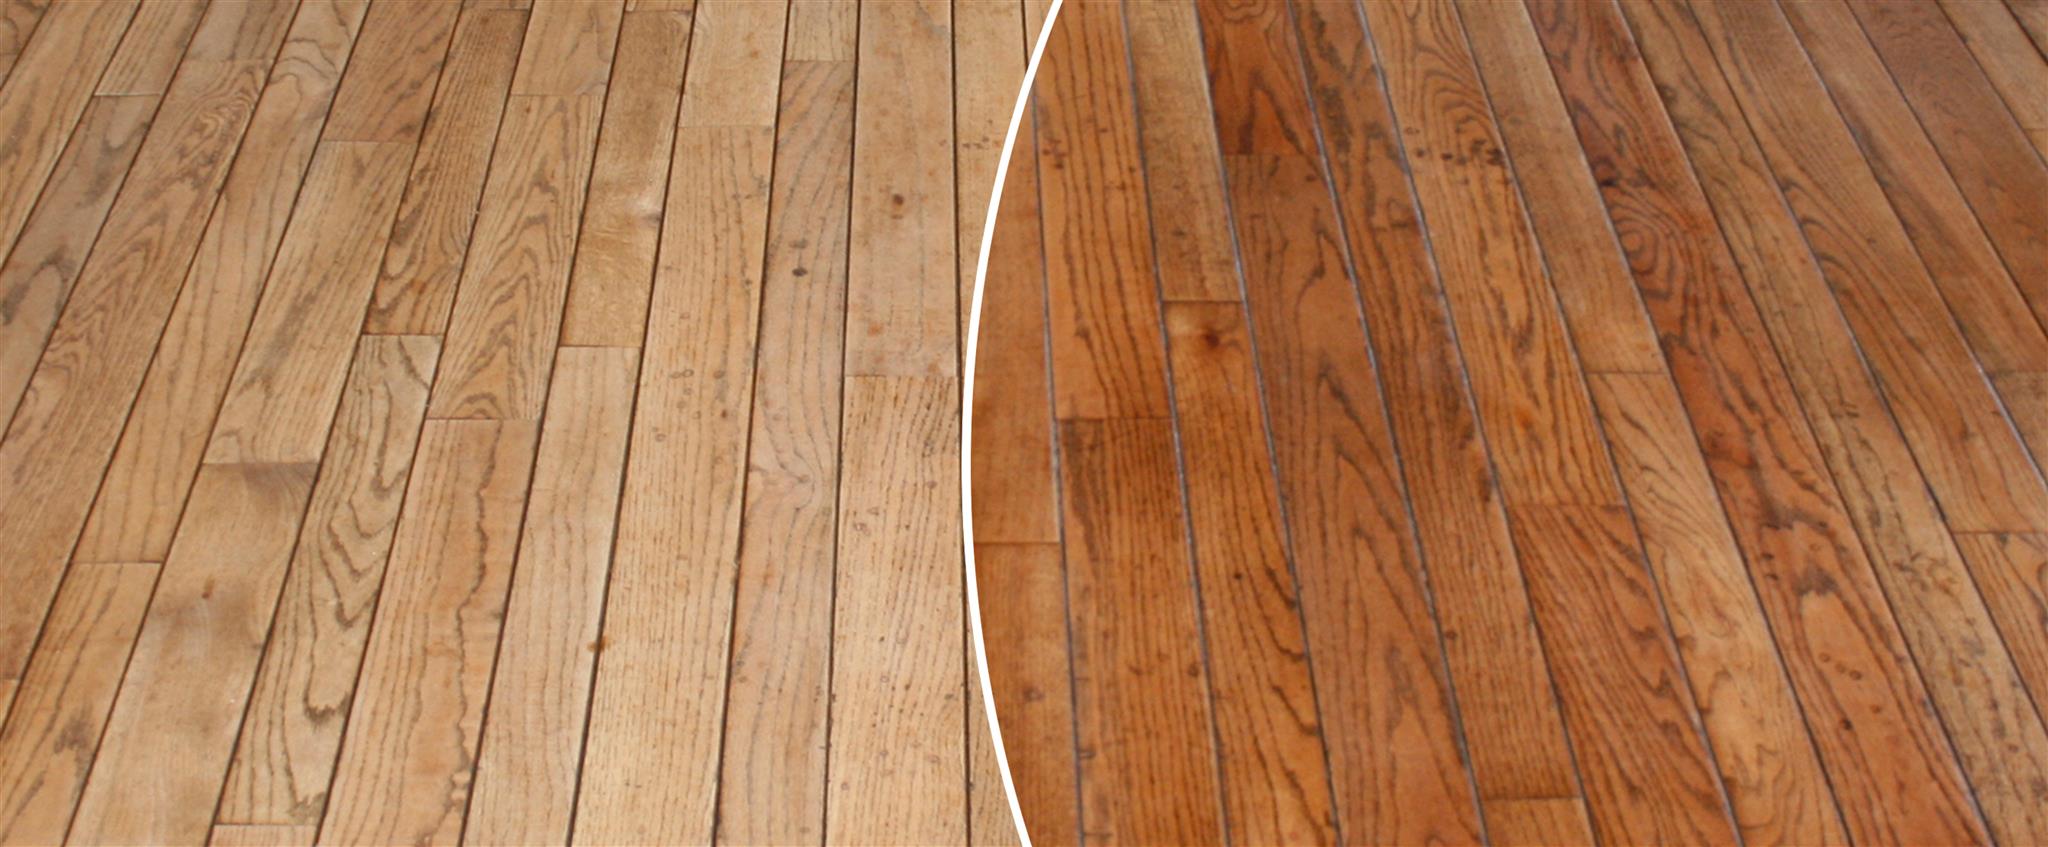 Wood Floor Refinishing Services N Hance, Hardwood Floor Refinishing Toledo